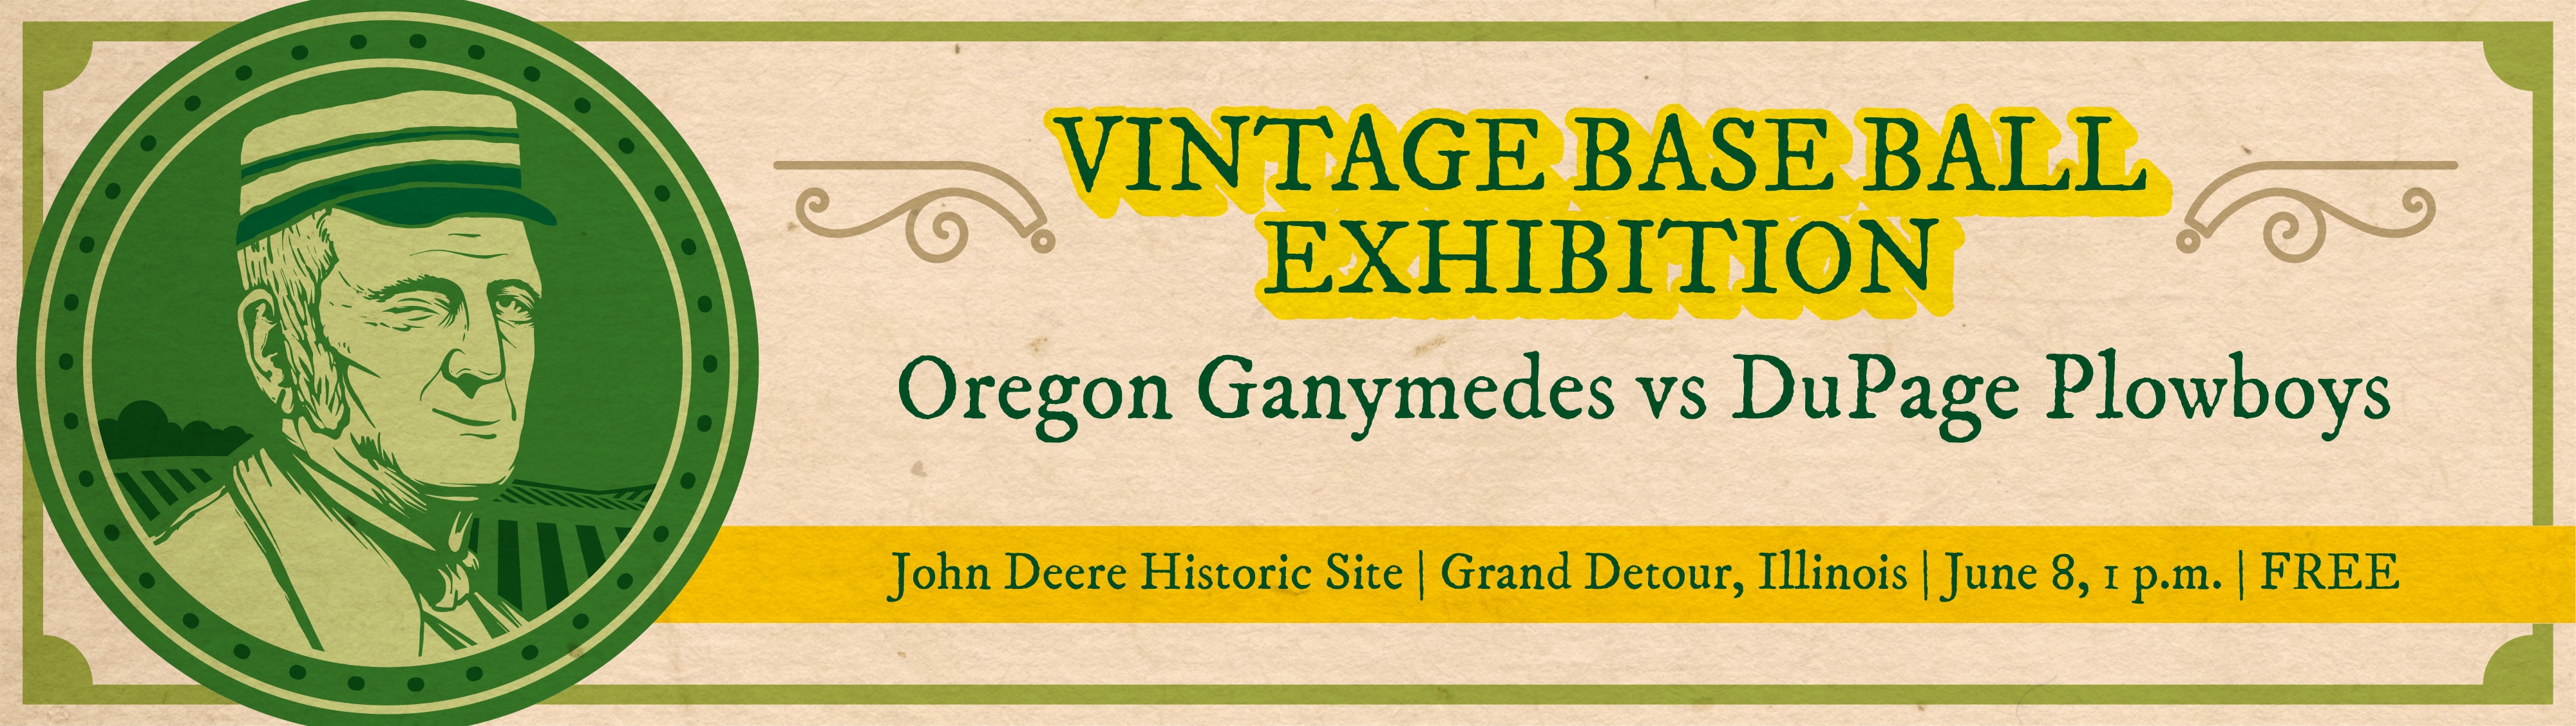 Banner that says "Vintage Base Ball Exhibition - Oregon Ganymedes vs DuPage Plowboys. John Deere Historic Site | Grand Detour, Il | June 8, 1 P.M. | FREE admission"